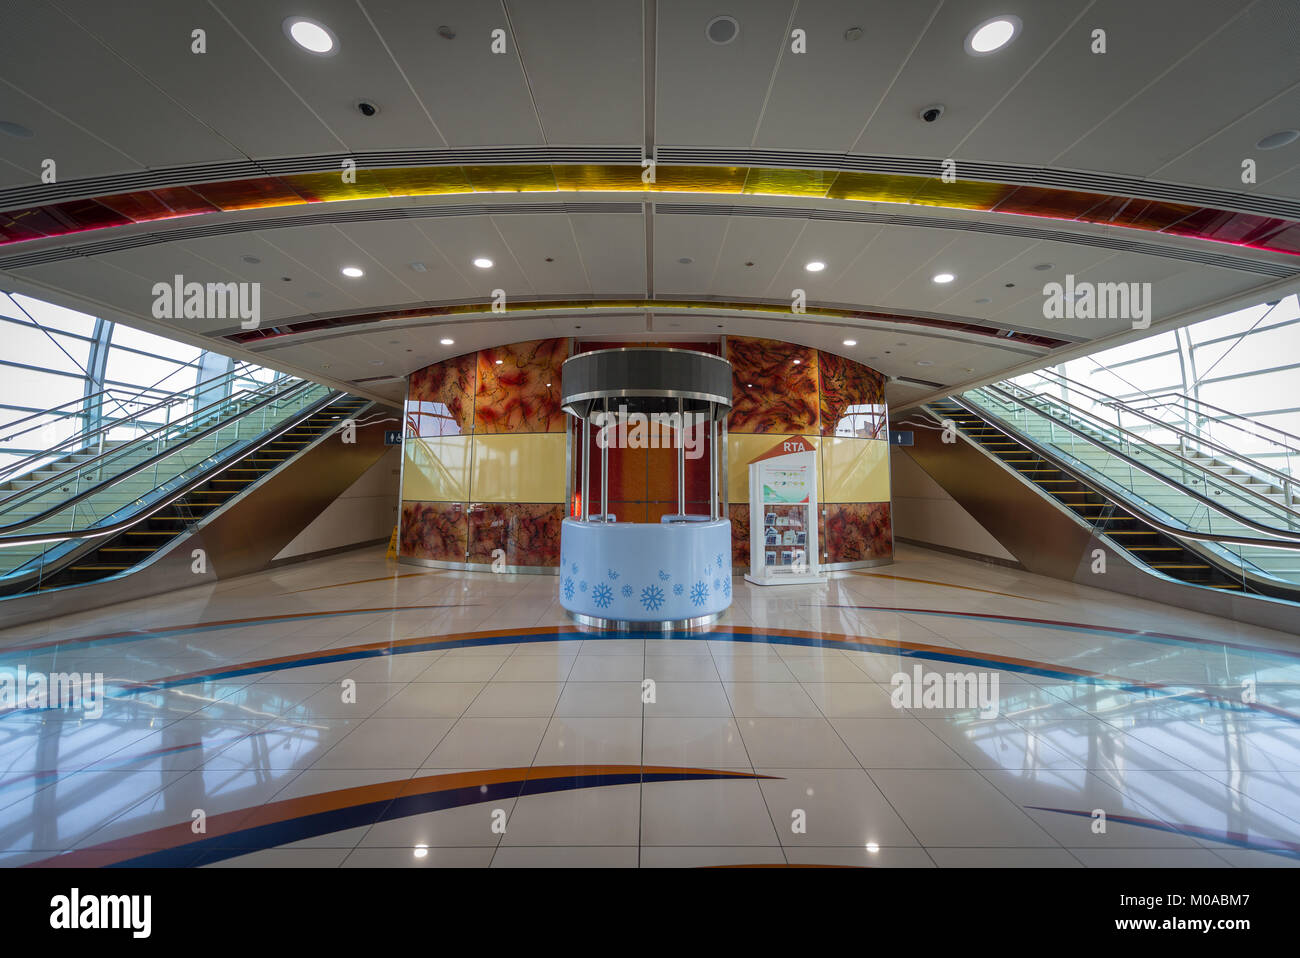 One of the stations along the Dubai metro, Dubai, UAE, United Arab Emirates Stock Photo